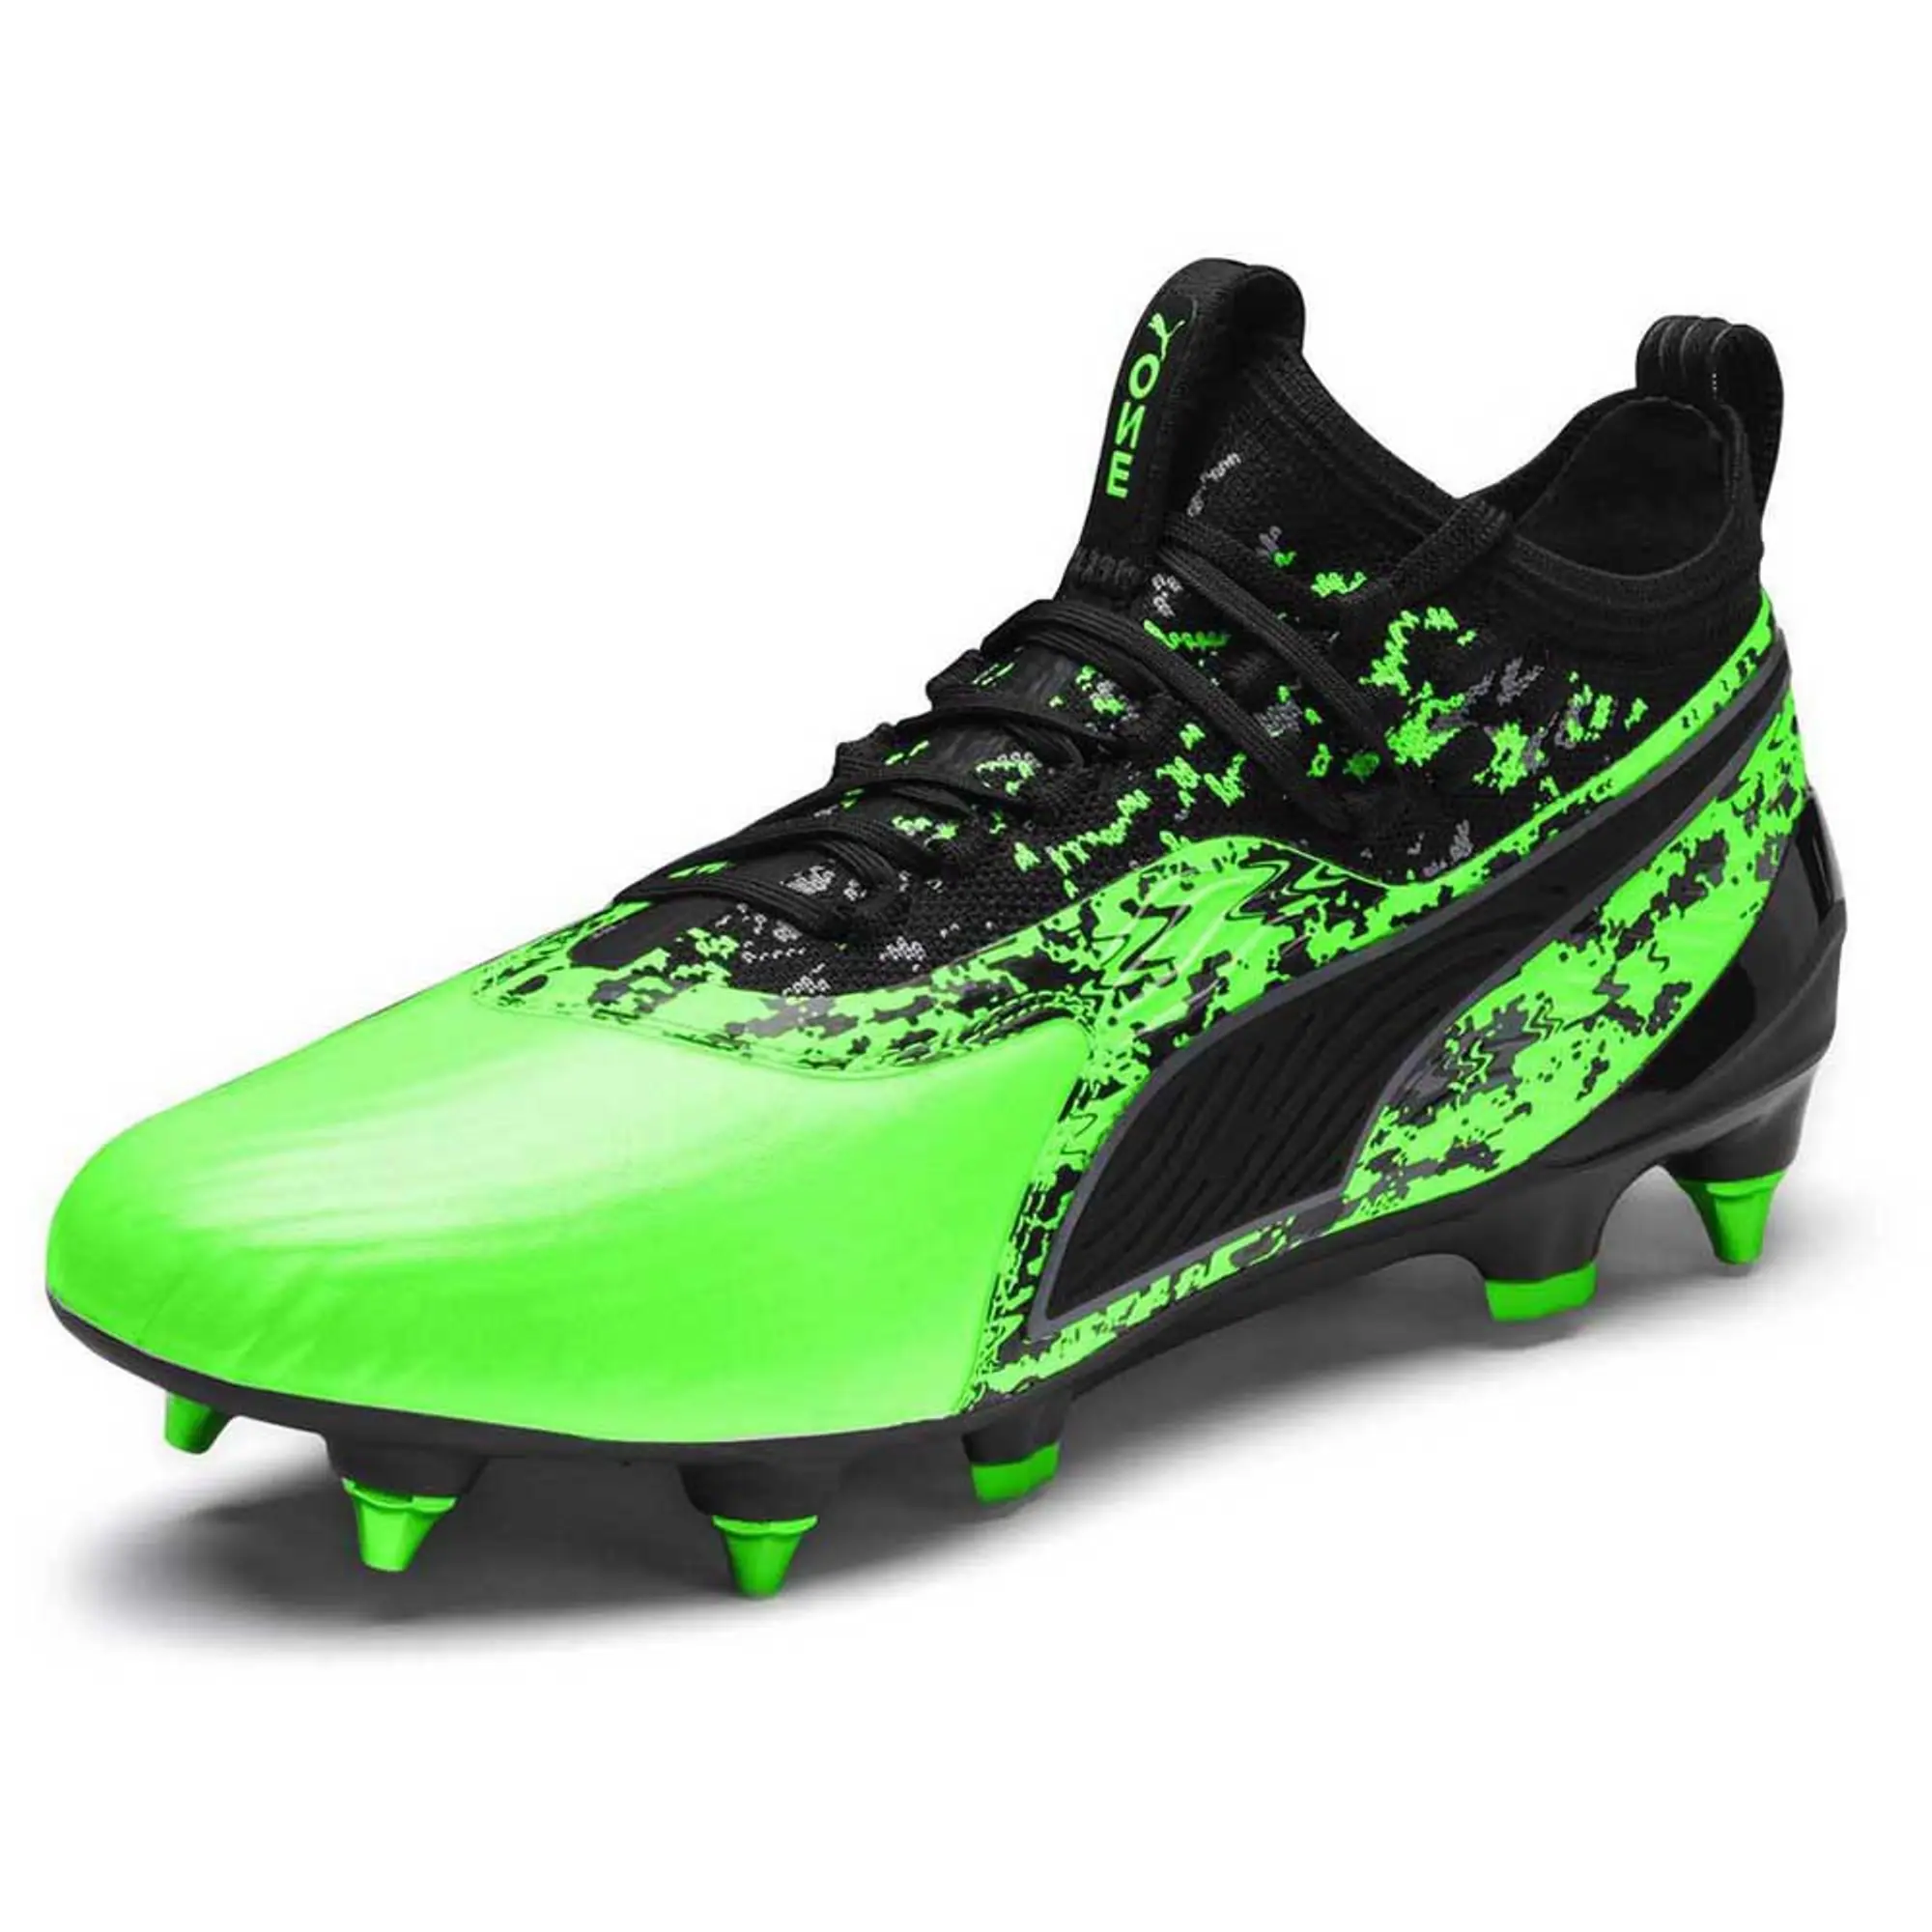 Puma One 19.1 Mix Sg Football Boots  - Green,Black